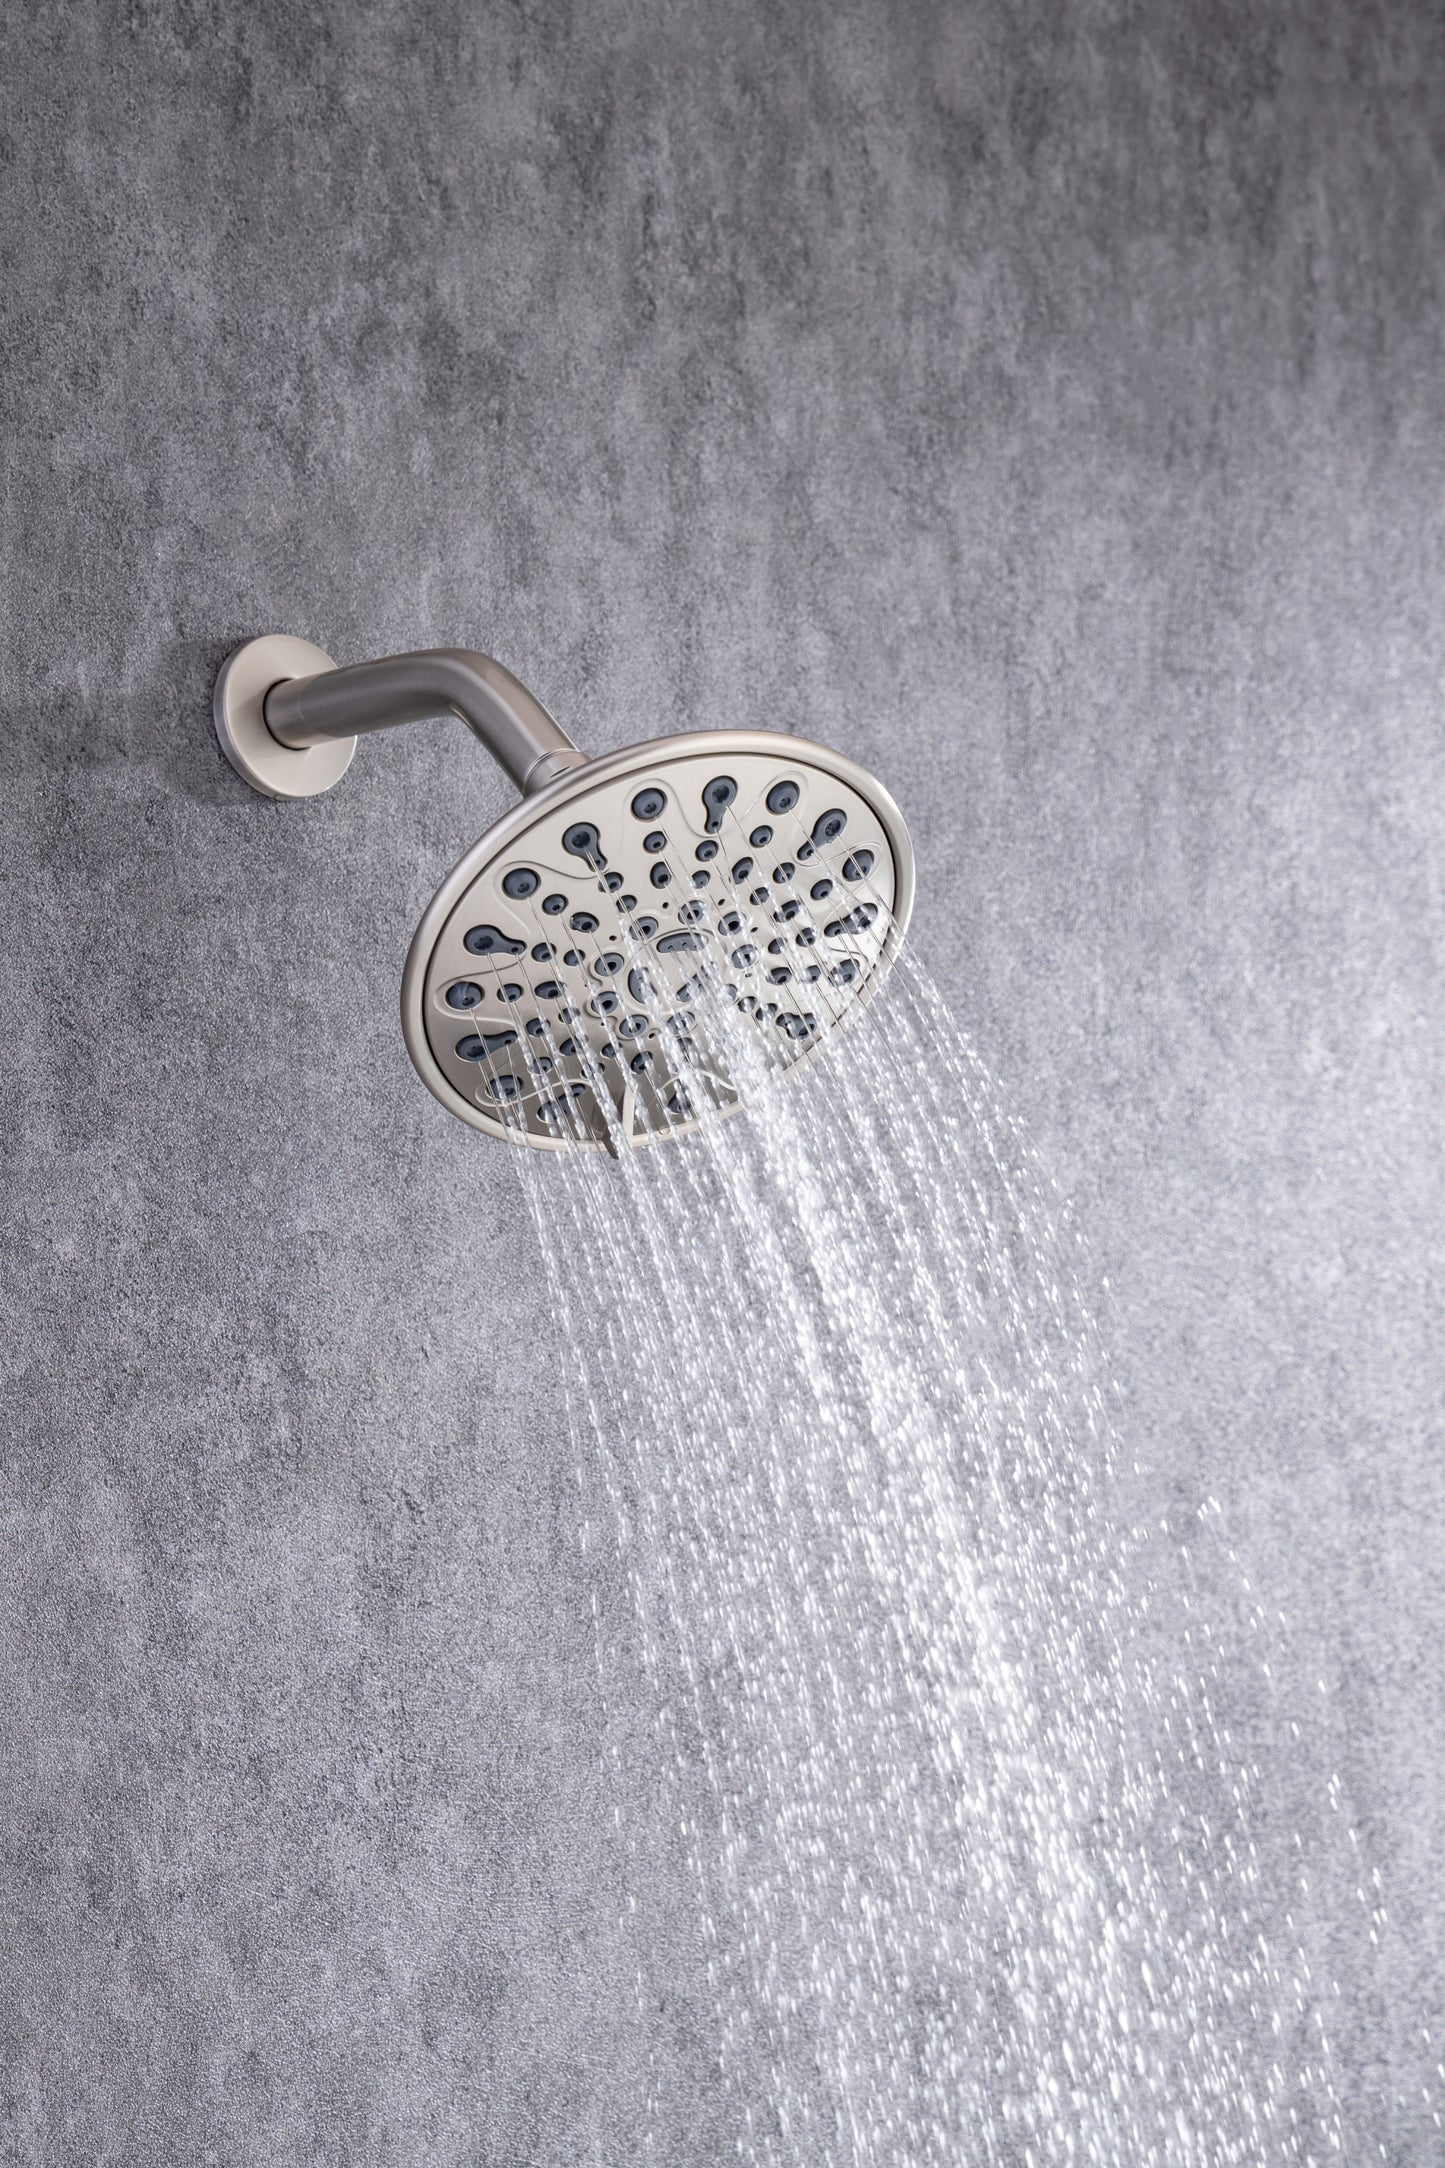 6 In. Detachable Handheld Shower Head Shower Faucet Shower System